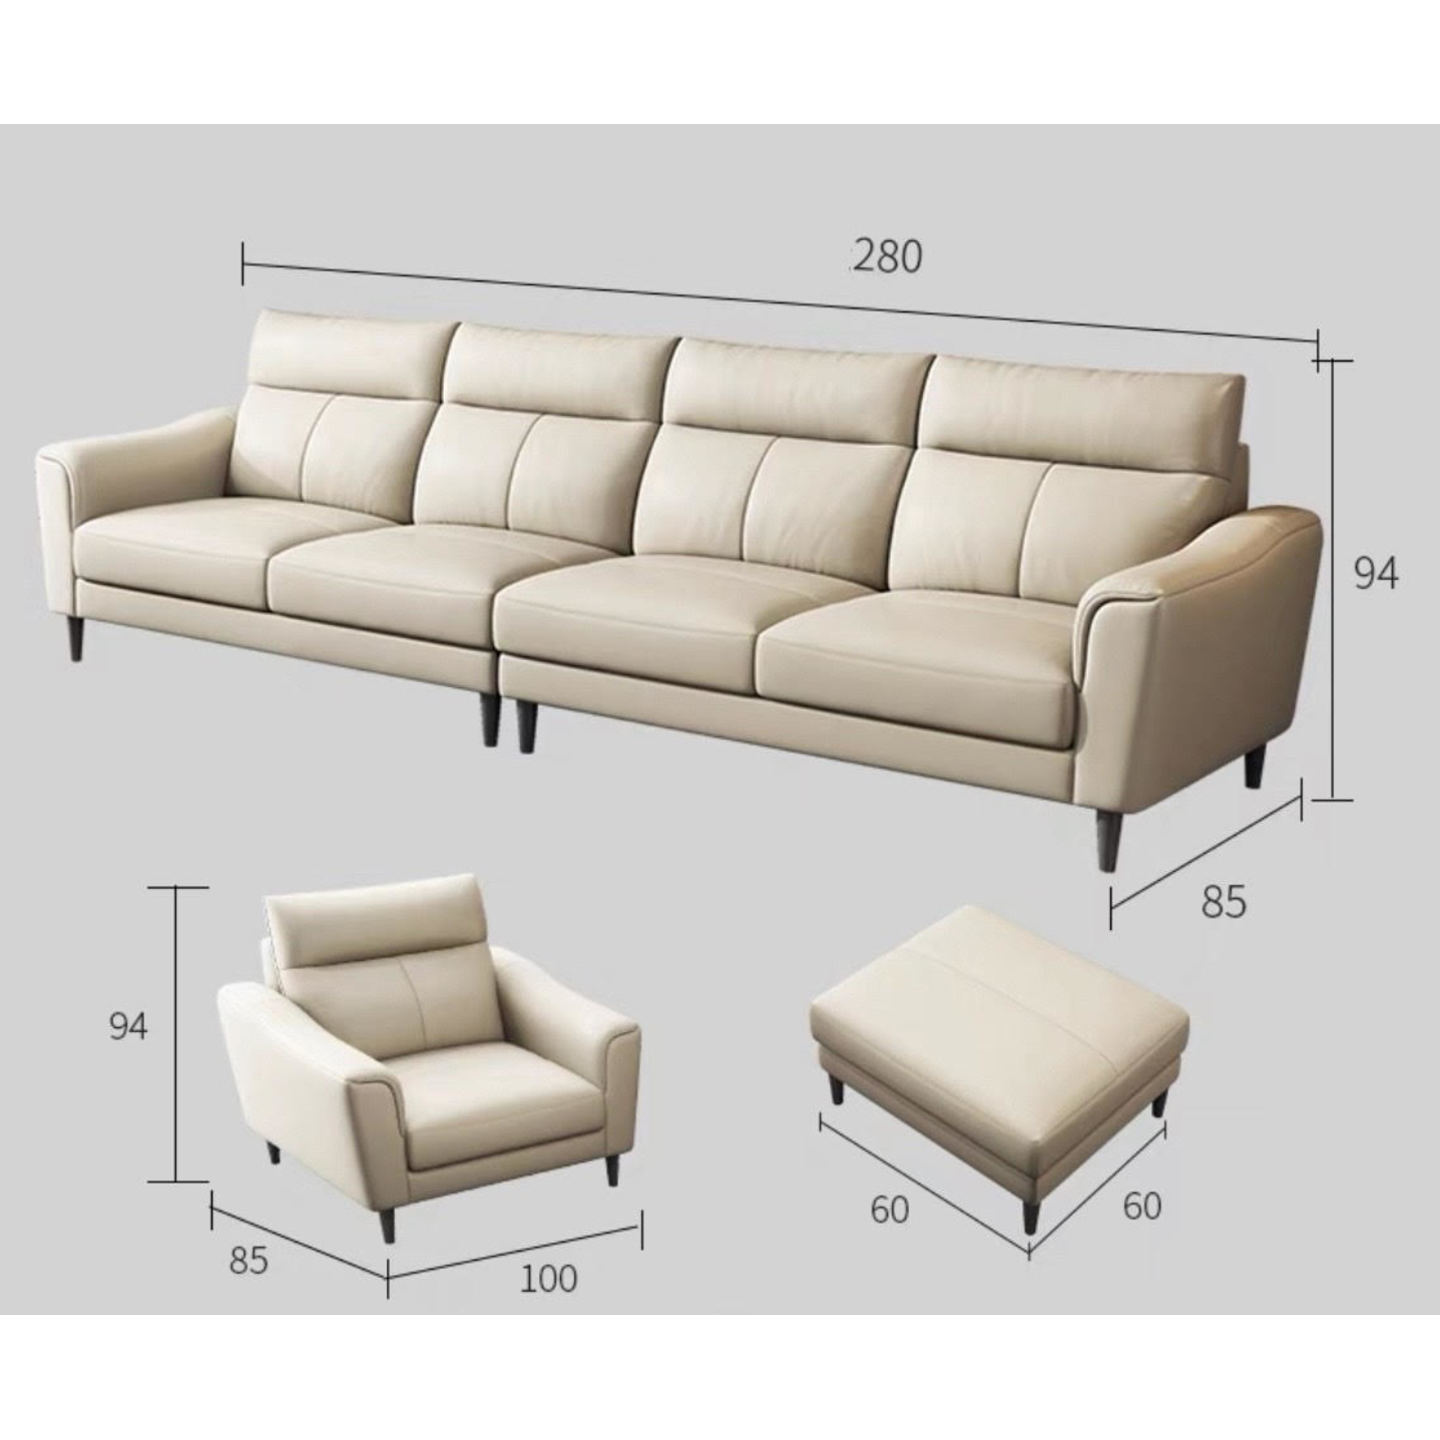 Nappa Premium Italian Sofa Contact Leather - Four Seater + Single Seater + Leg Rest